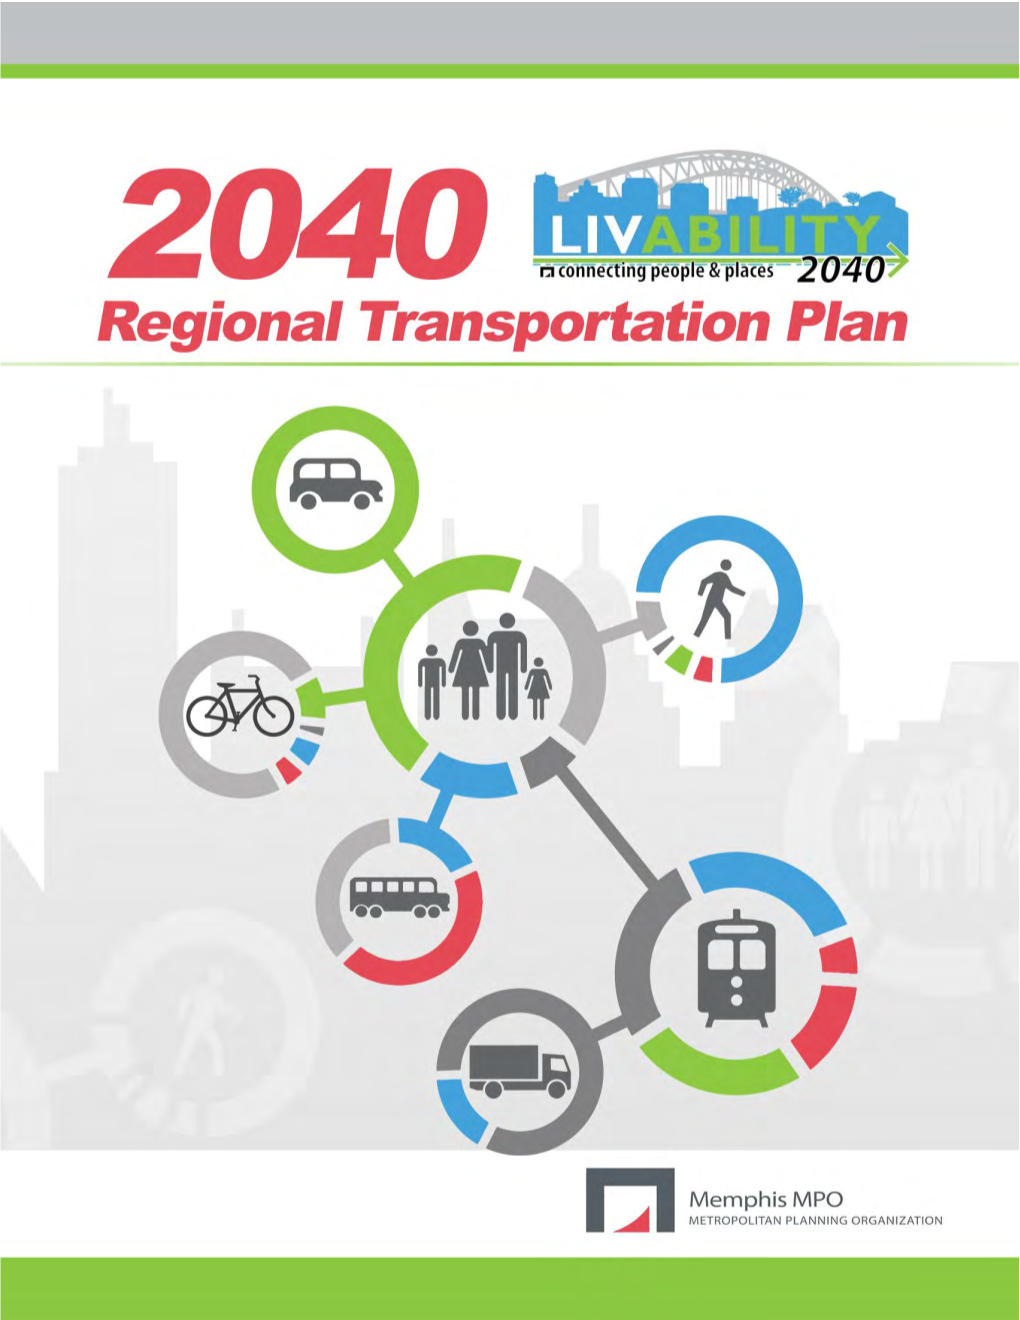 Livability 2040 Regional Transportation Plan | I